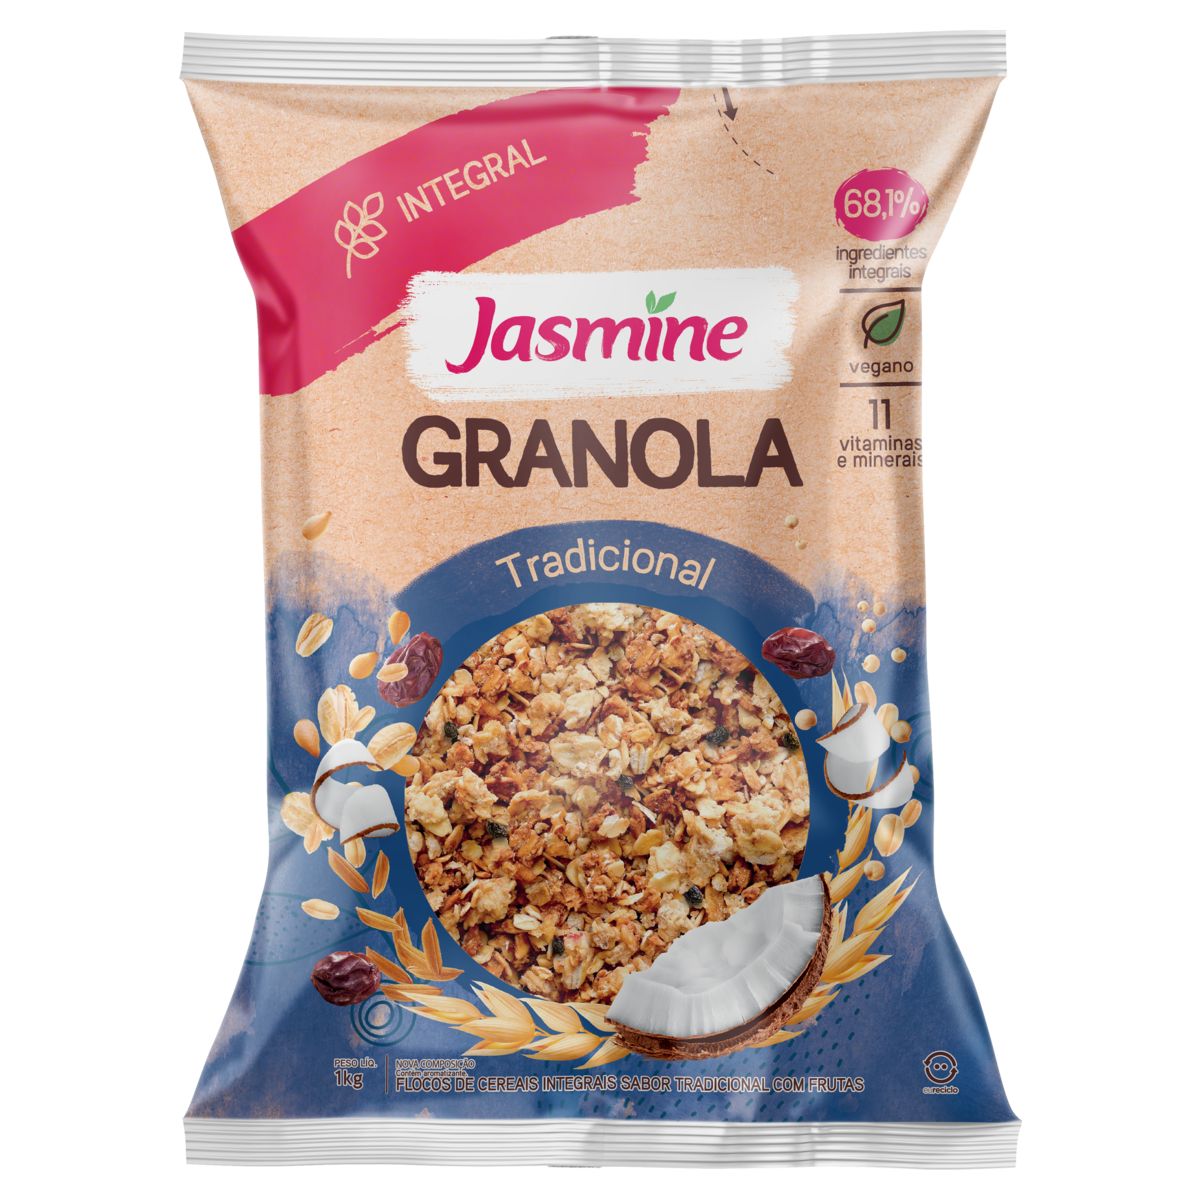 Granola Jasmine Tradicional 68,1% Integral Pacote 1kg image number 0